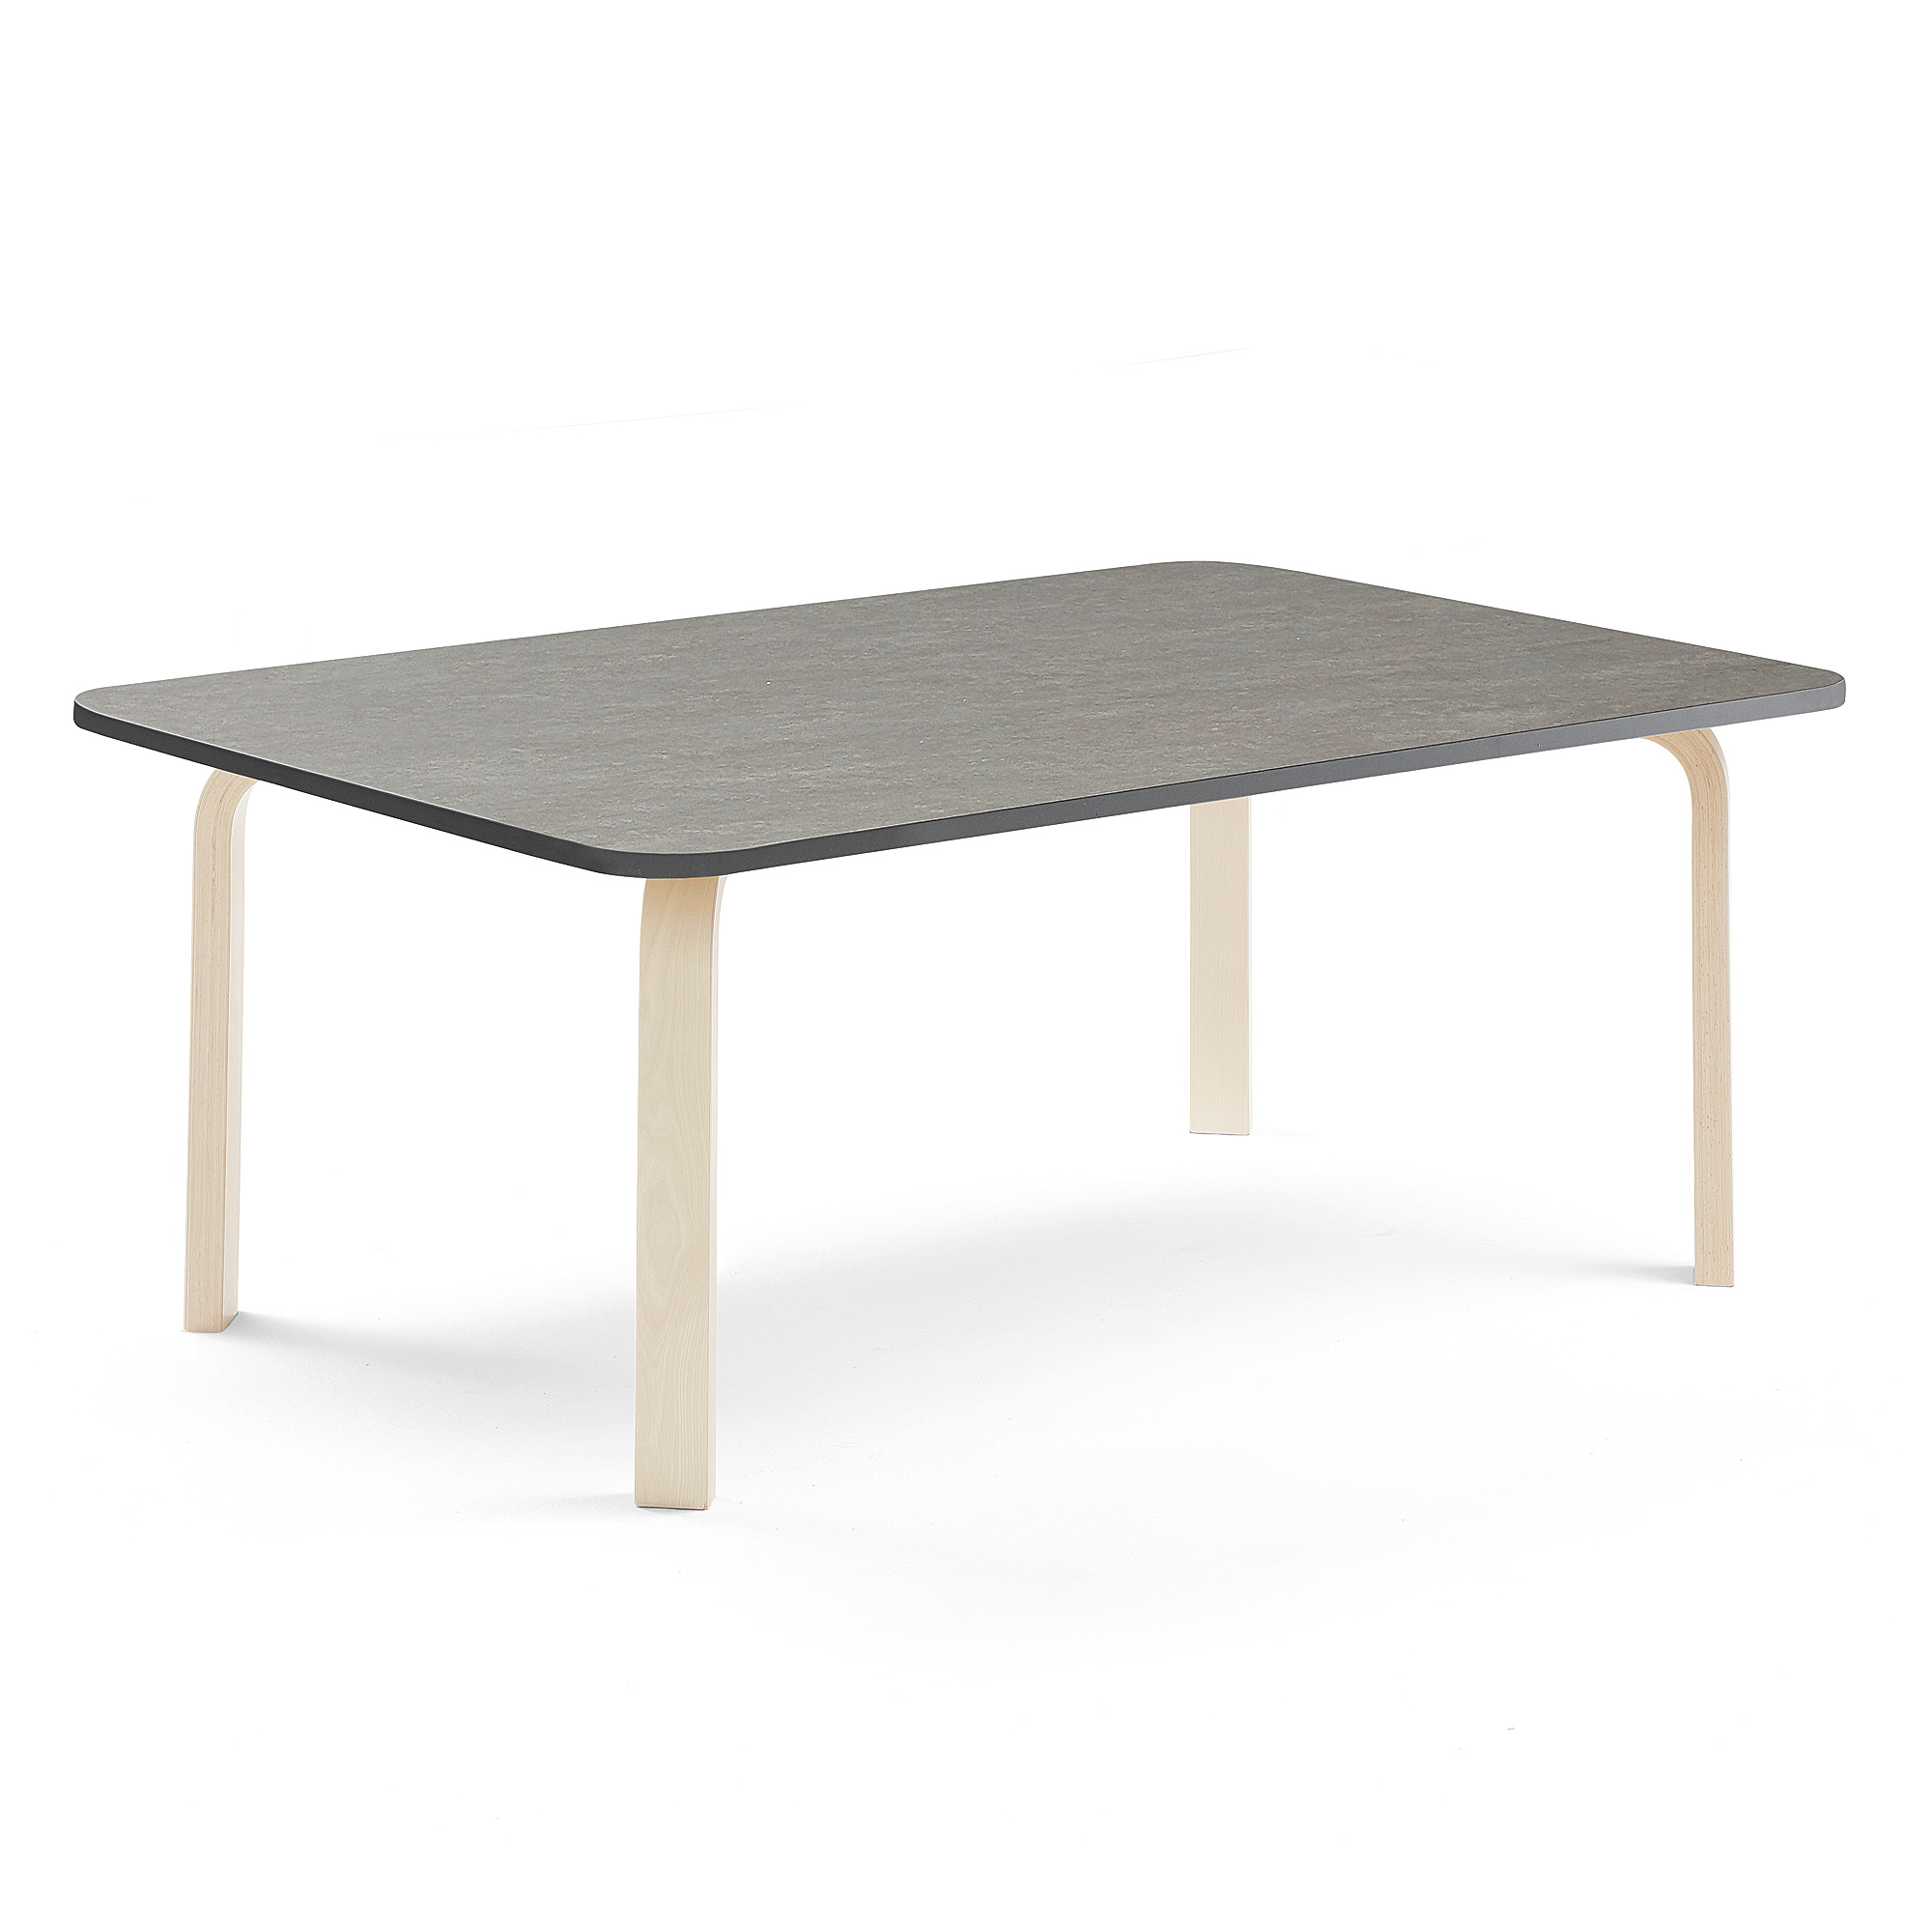 Stůl ELTON, 1800x700x530 mm, bříza, akustické linoleum, tmavě šedá